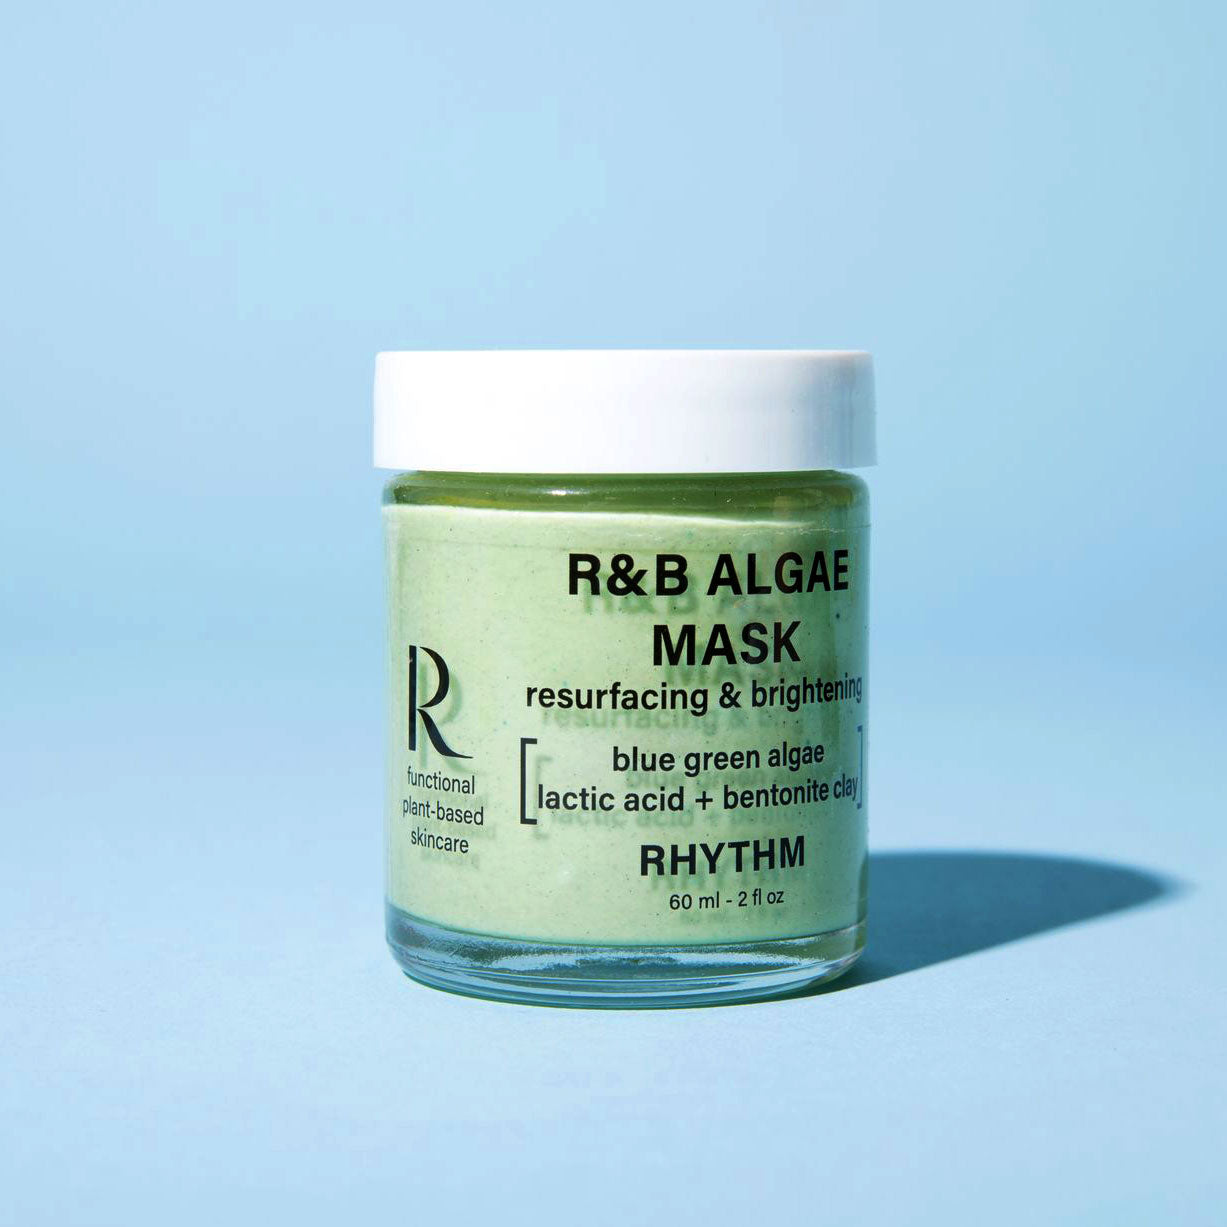 R&B Algae Mask